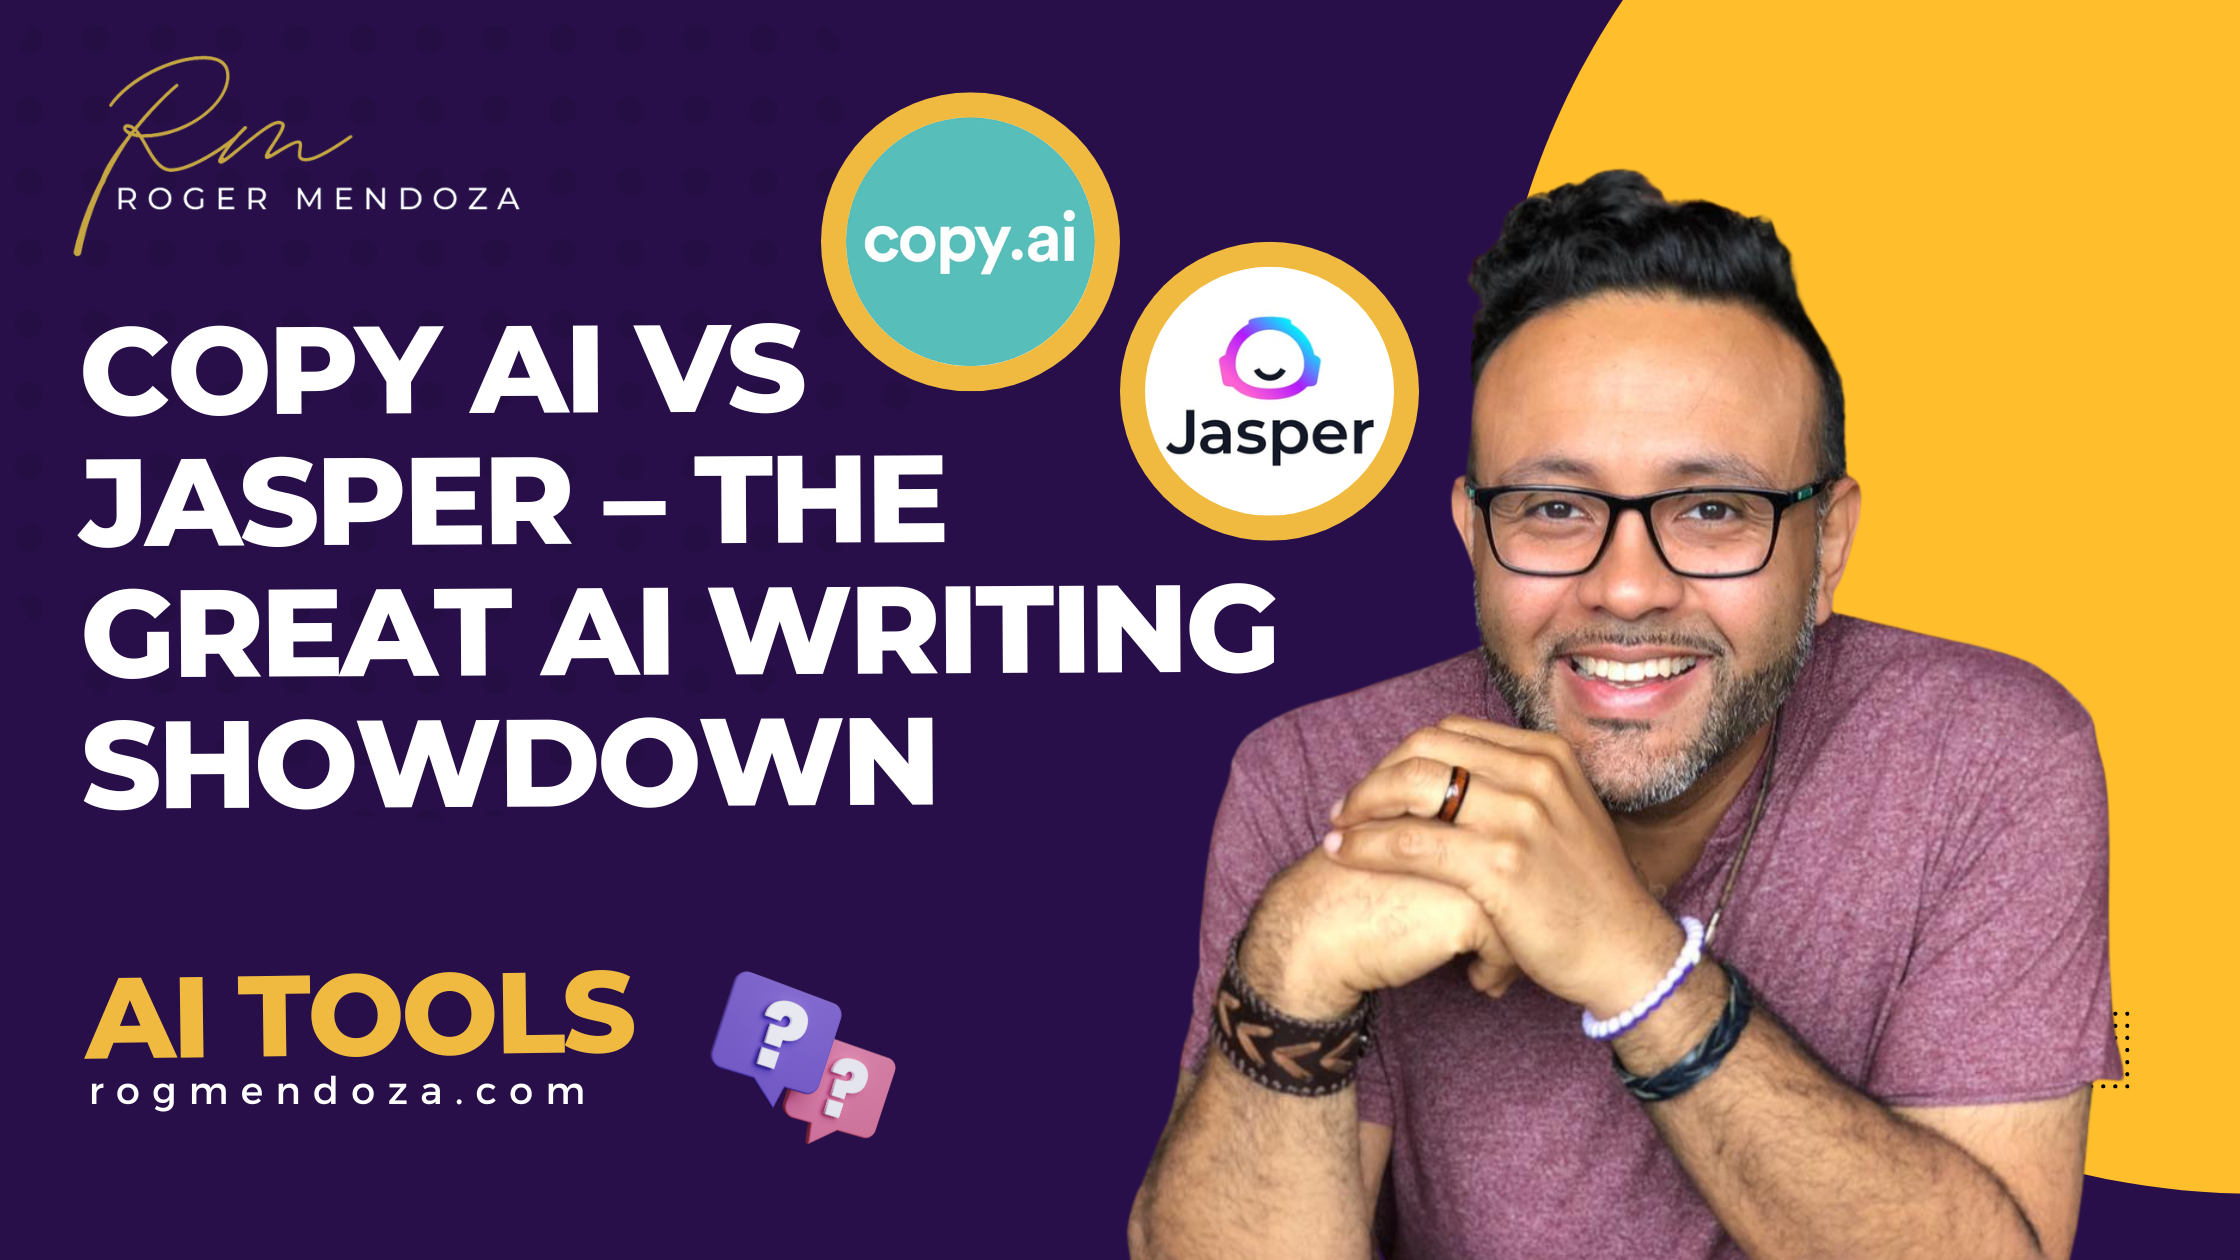 Copy ai vs Jasper - The Great AI Writing Showdown